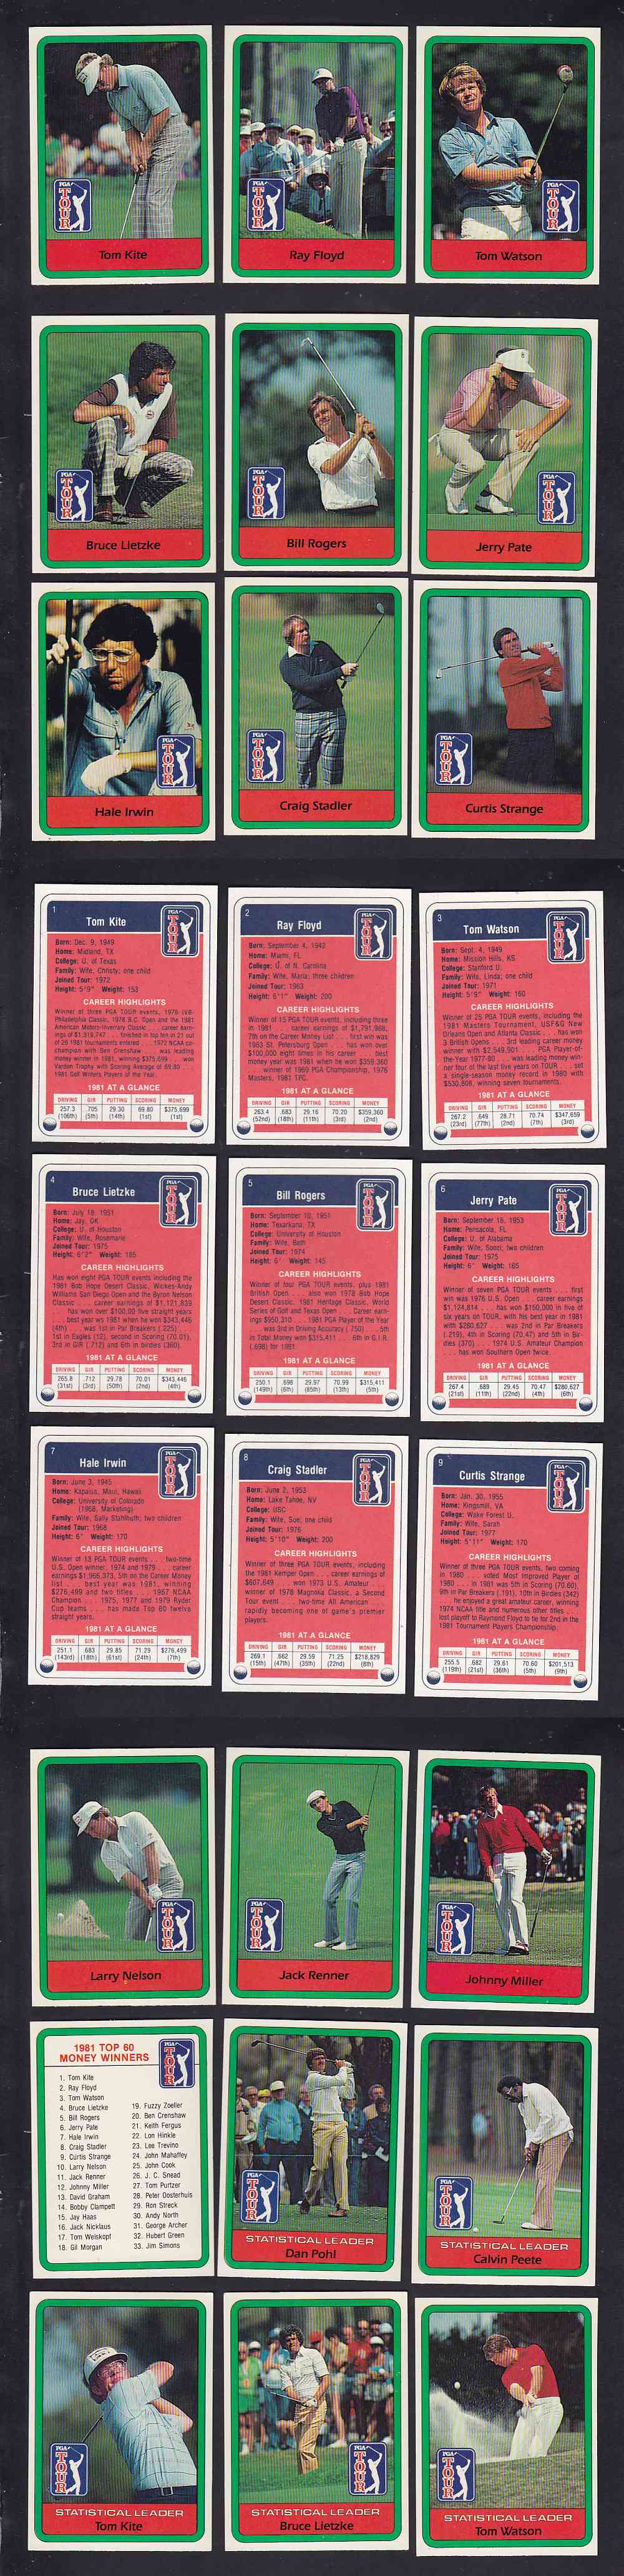 1981-82 DONRUSS PGA TOUR GOLF CARD FULL SET 66/66 photo